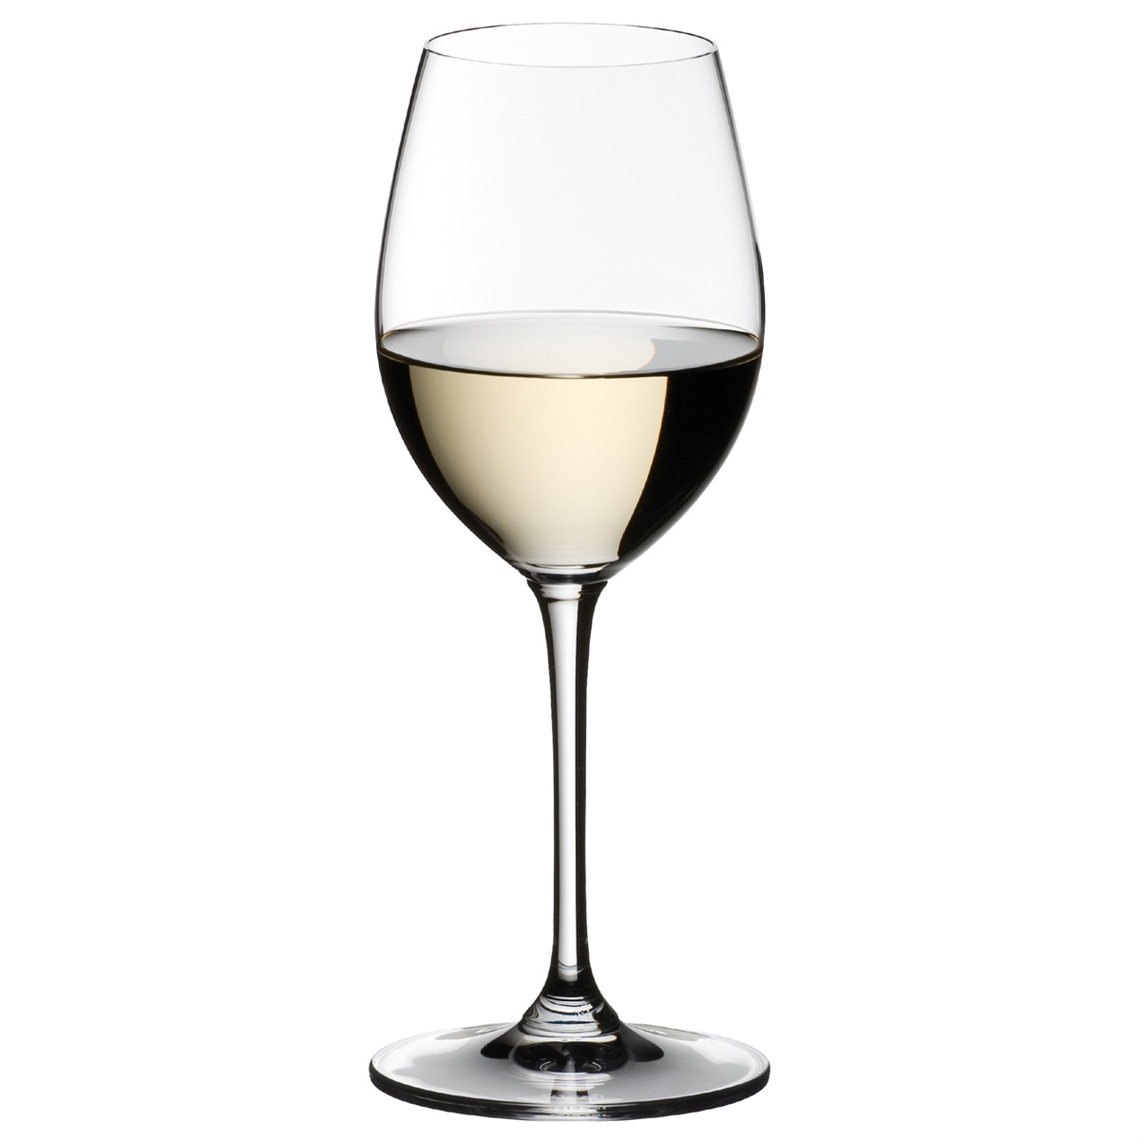 View more what makes iso wine tasting glasses so popular? from our Dessert Wine Glasses range